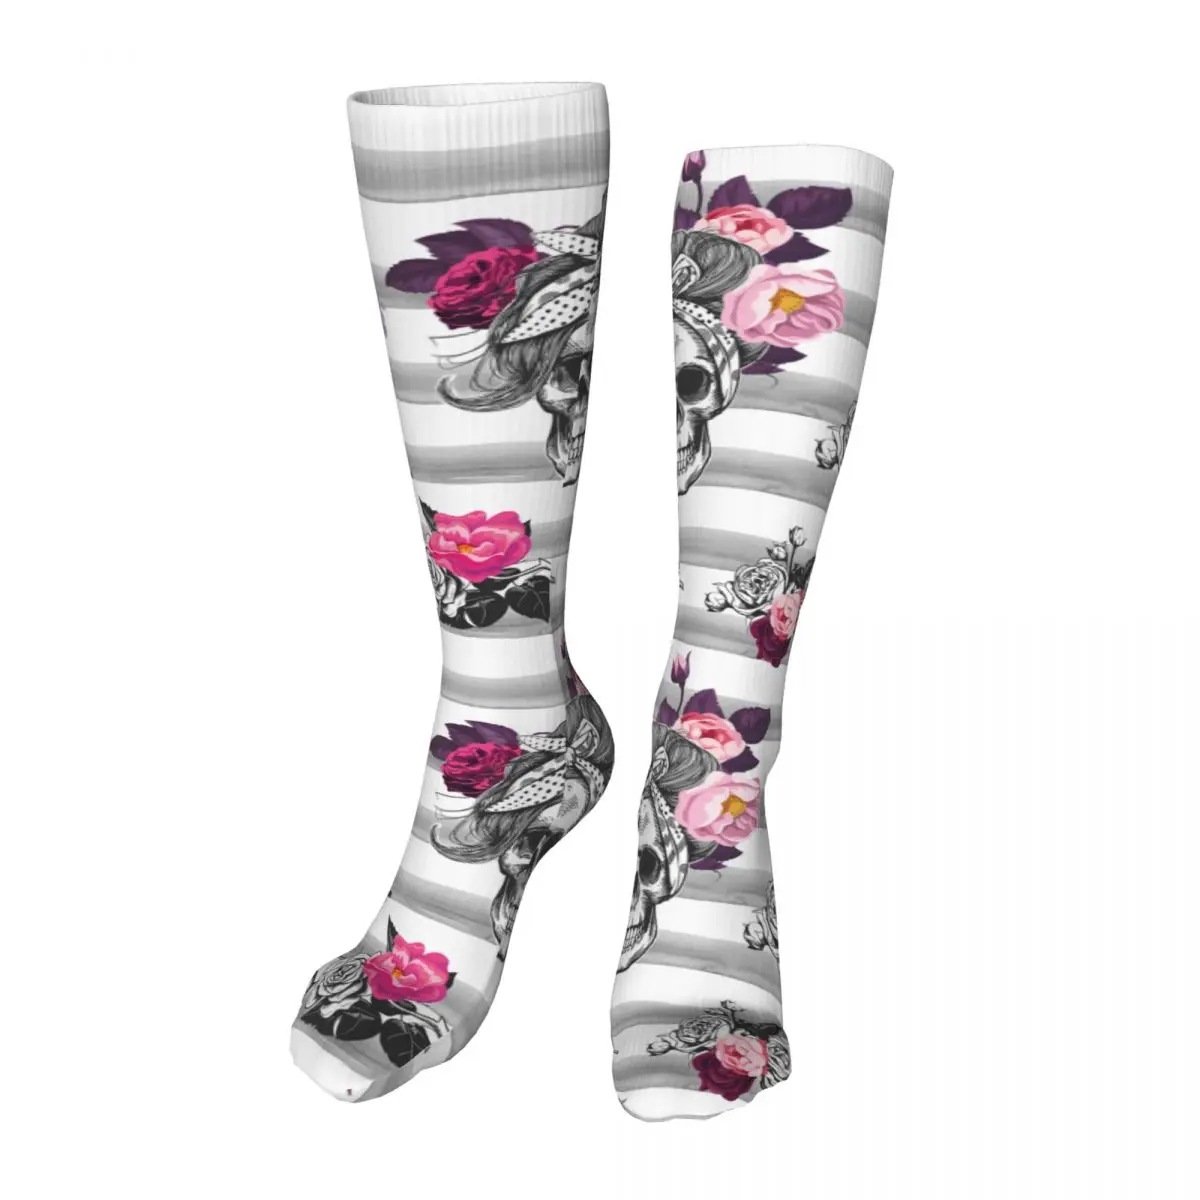 

New Compression Socks Crossfit Socks Skull Silhouettes Flowers Roses Stripes Sports Running Women Men Nursing High Stockings